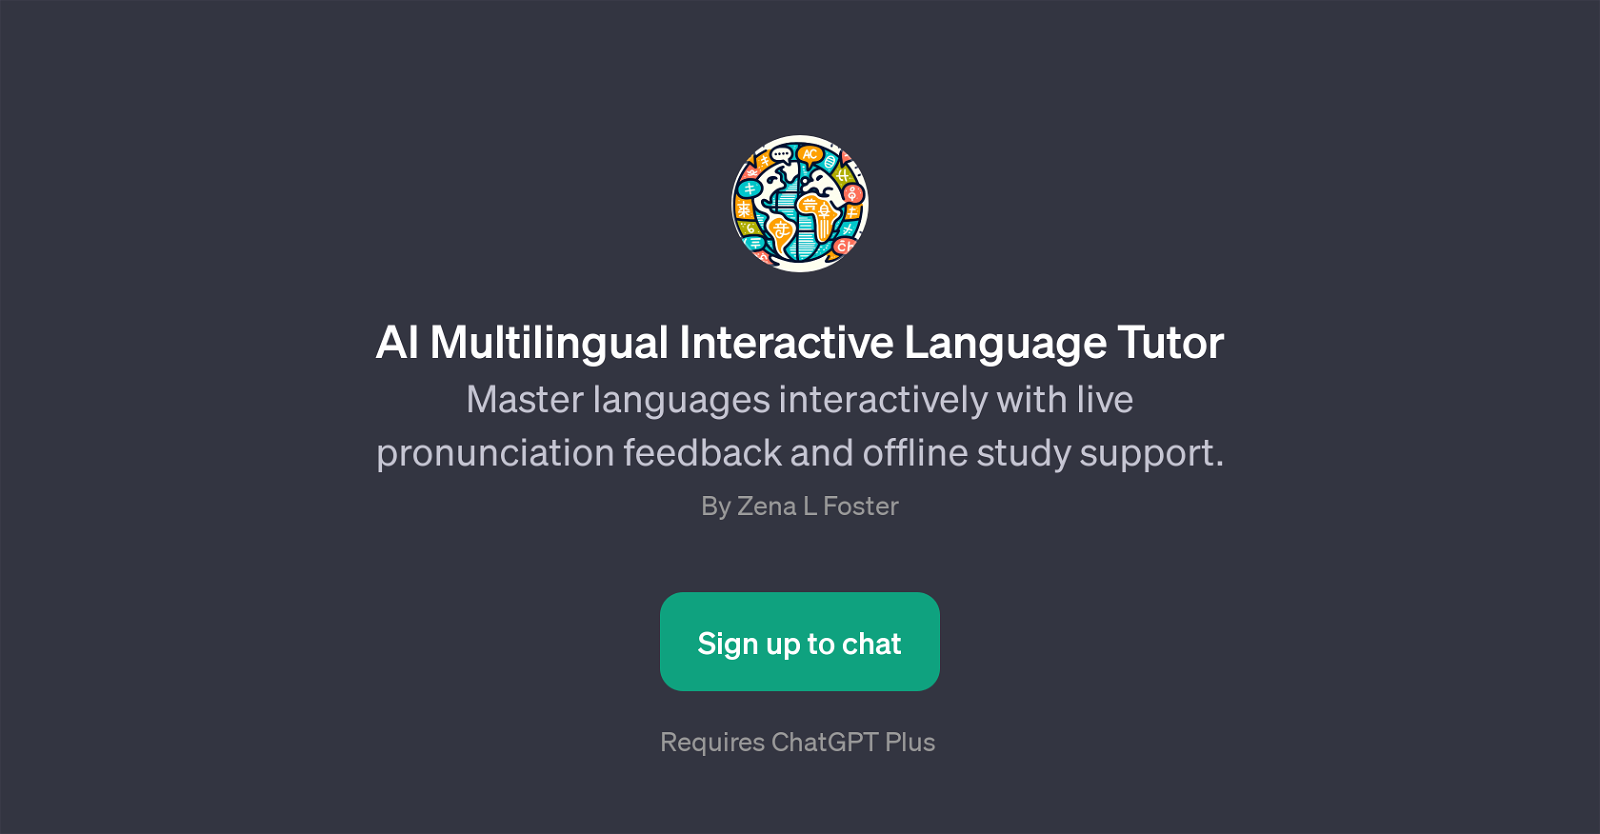 AI Multilingual Interactive Language Tutor website